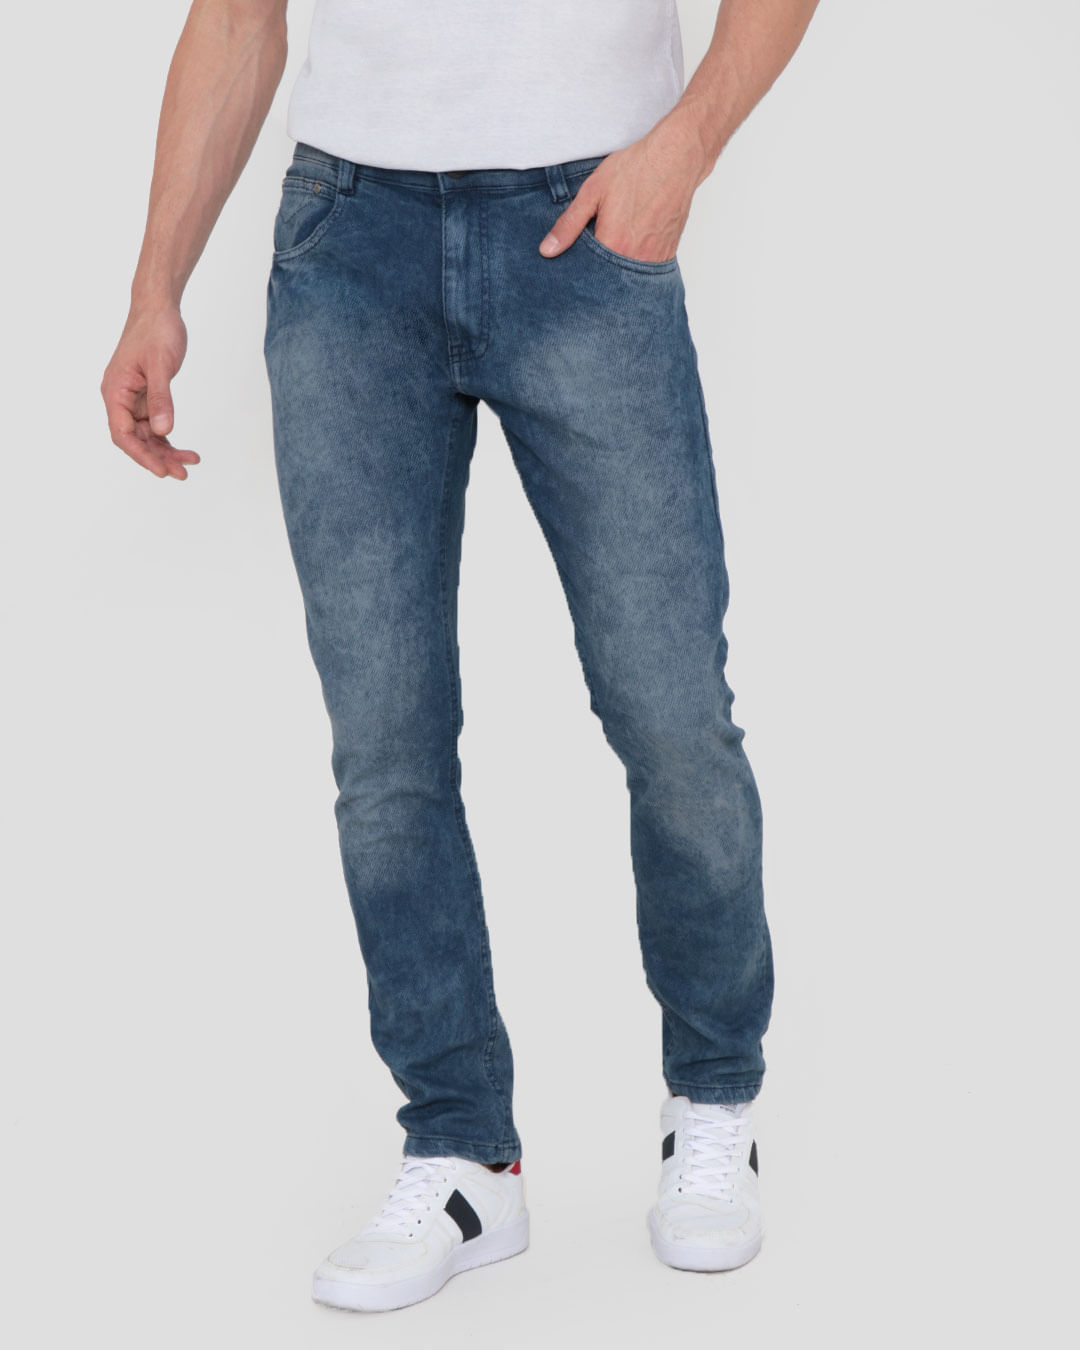 23221000408045-blue-jeans-medio-1